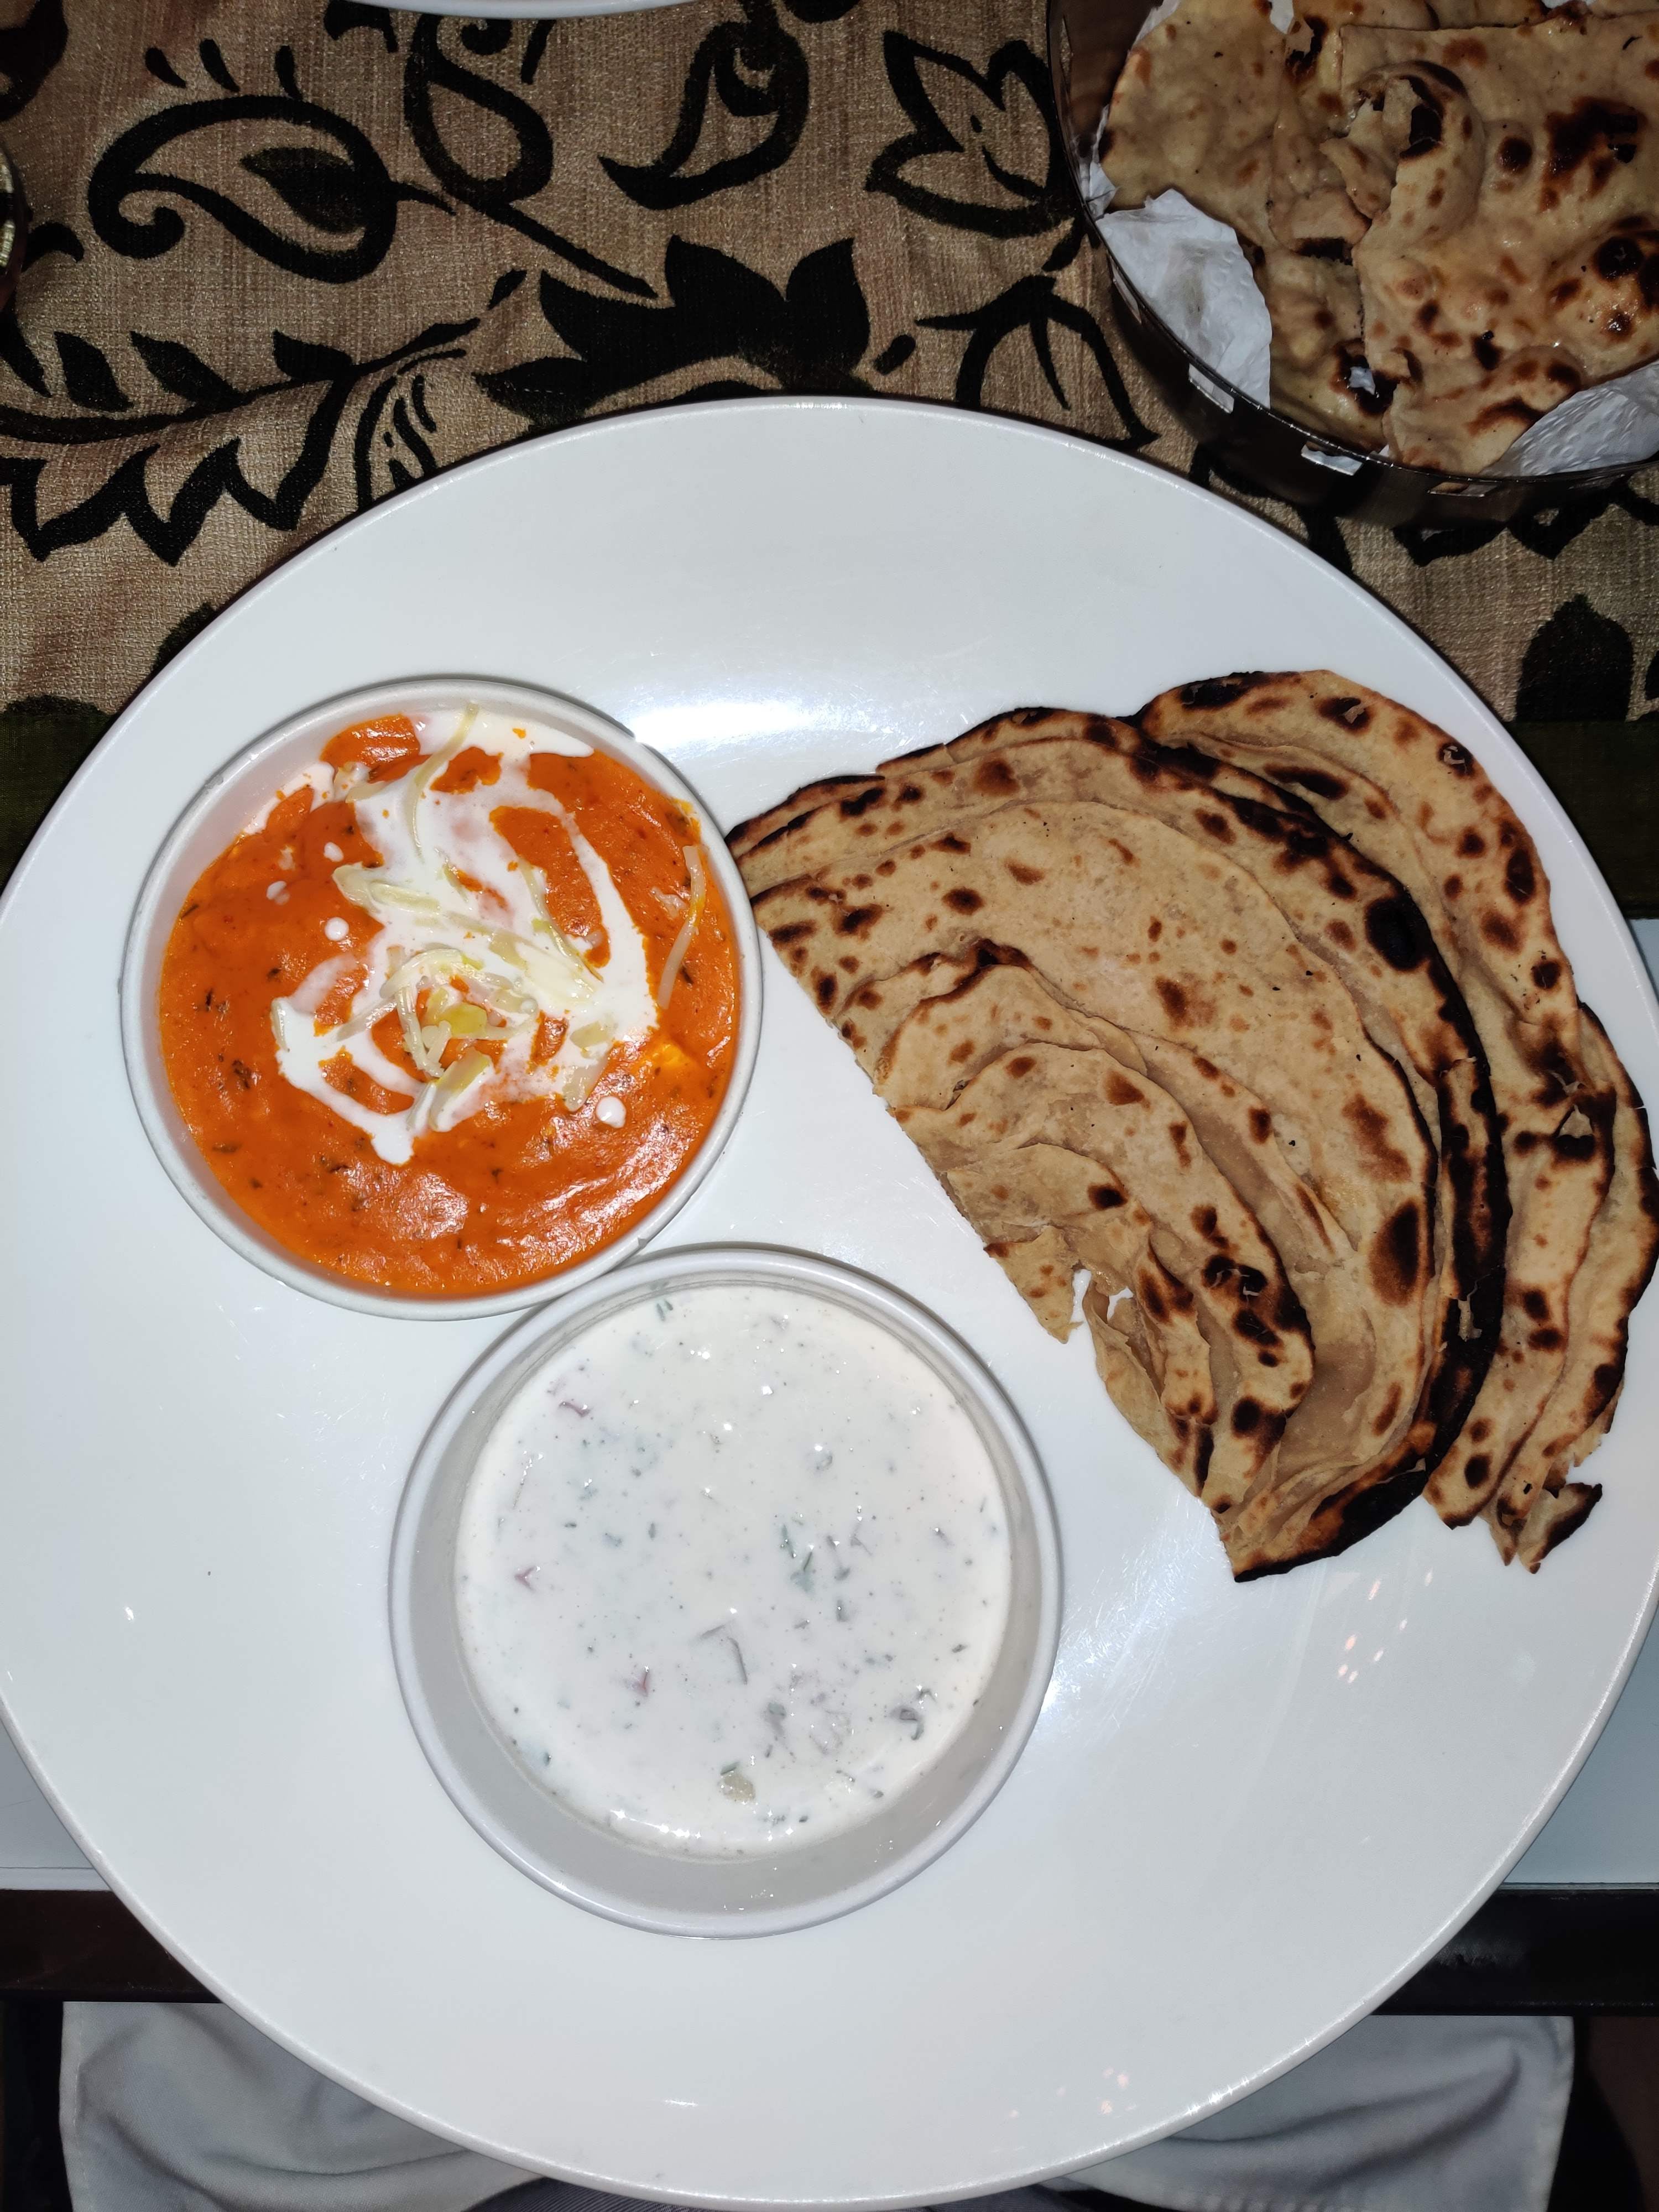 Dish,Food,Cuisine,Naan,Ingredient,Roti,Chapati,Roti canai,Indian cuisine,Paratha